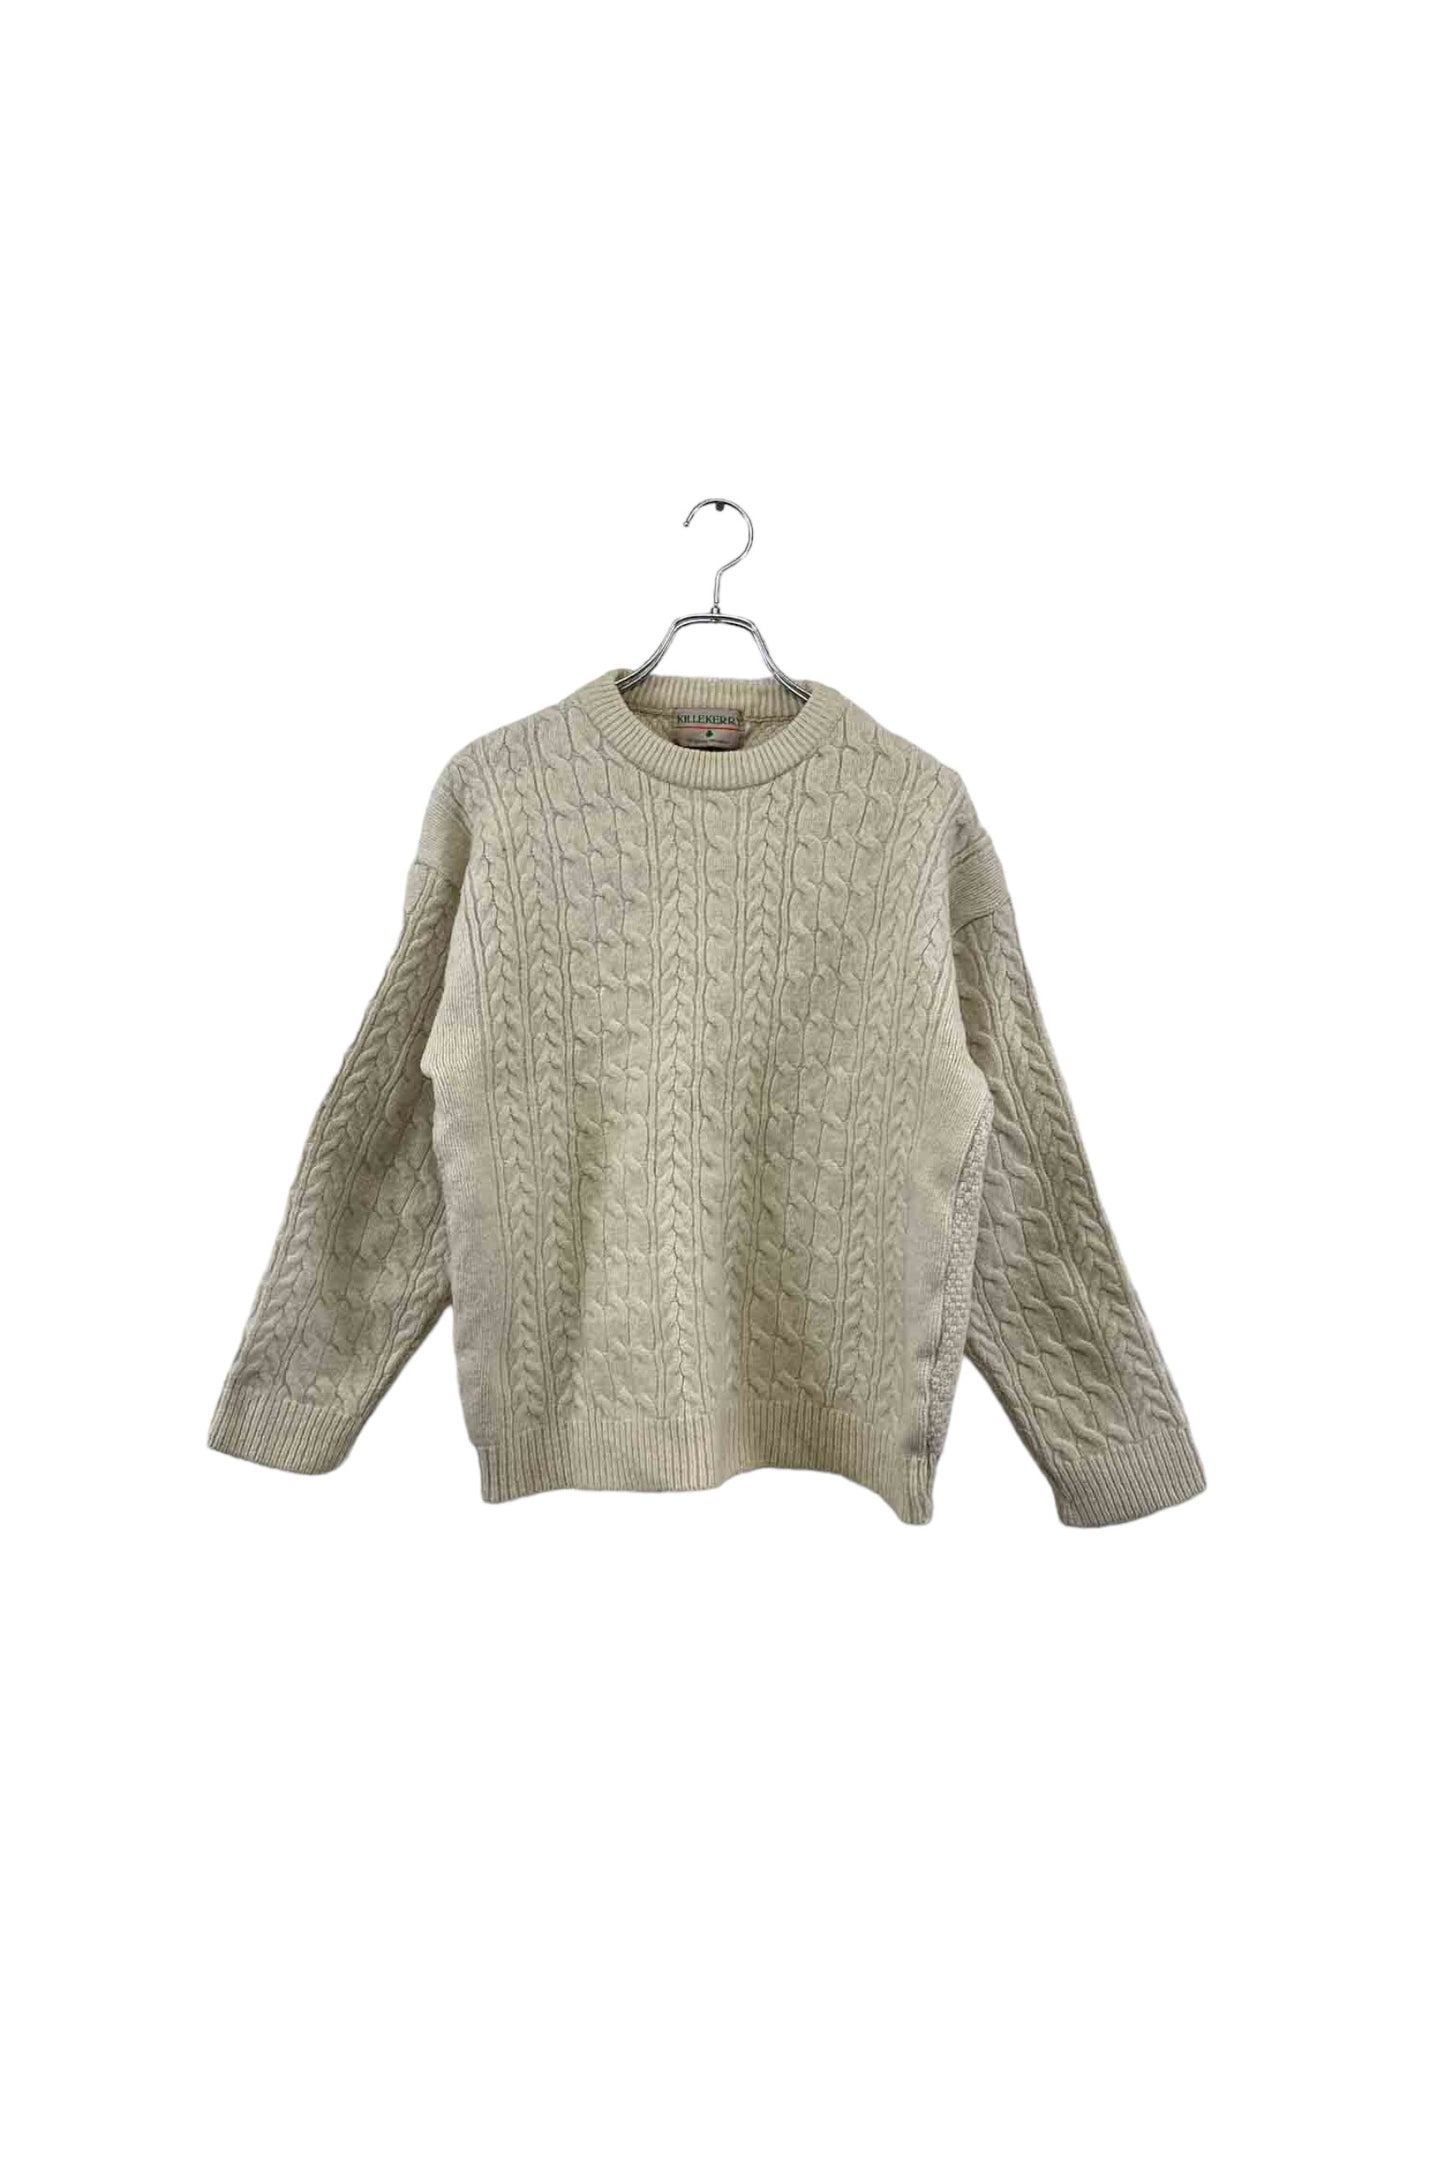 KILLE KERRY white wool sweater